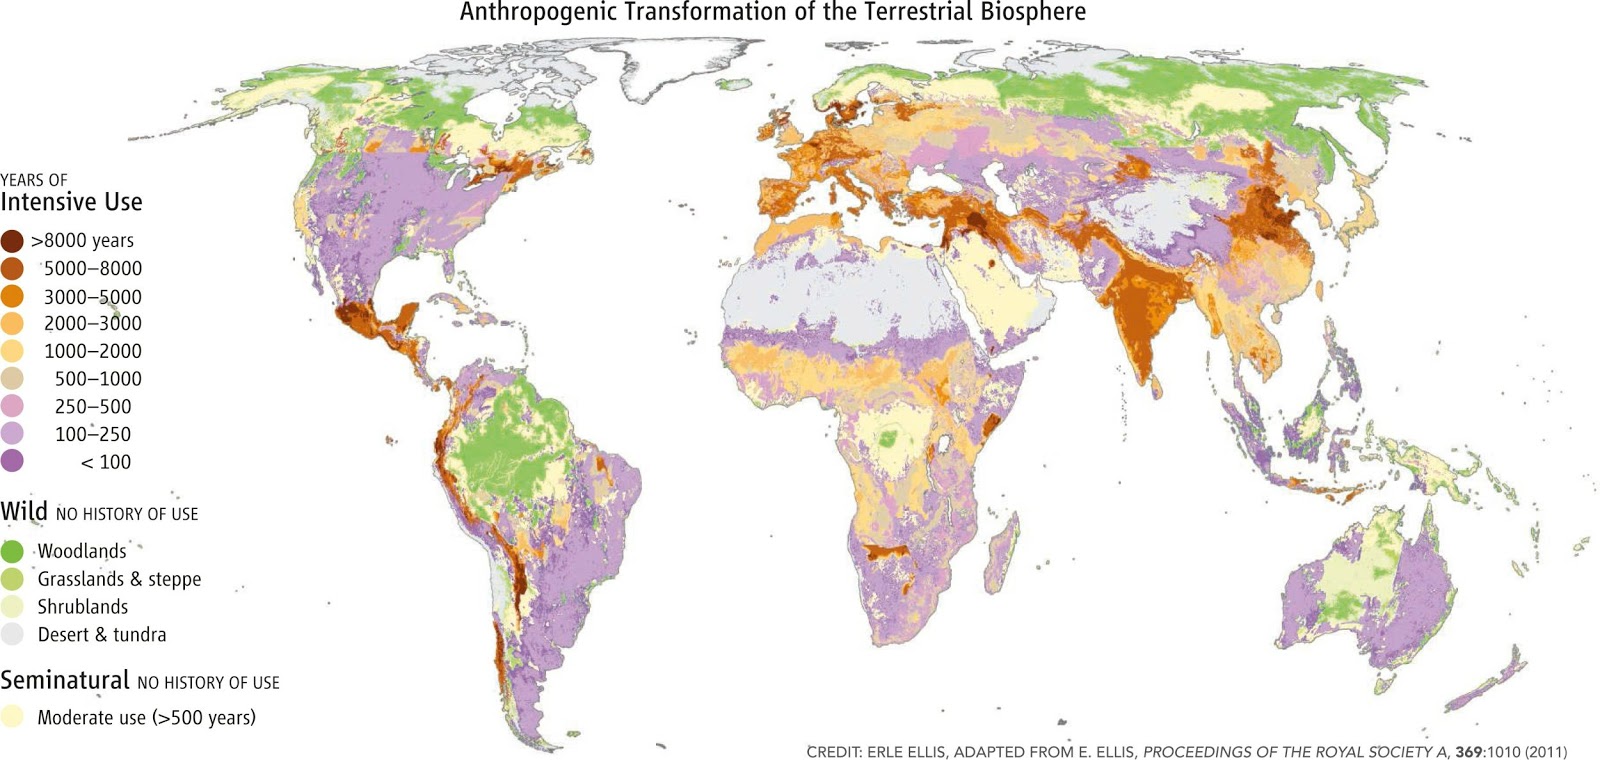 Anthropogenic transformation of the terrestrial biosphere